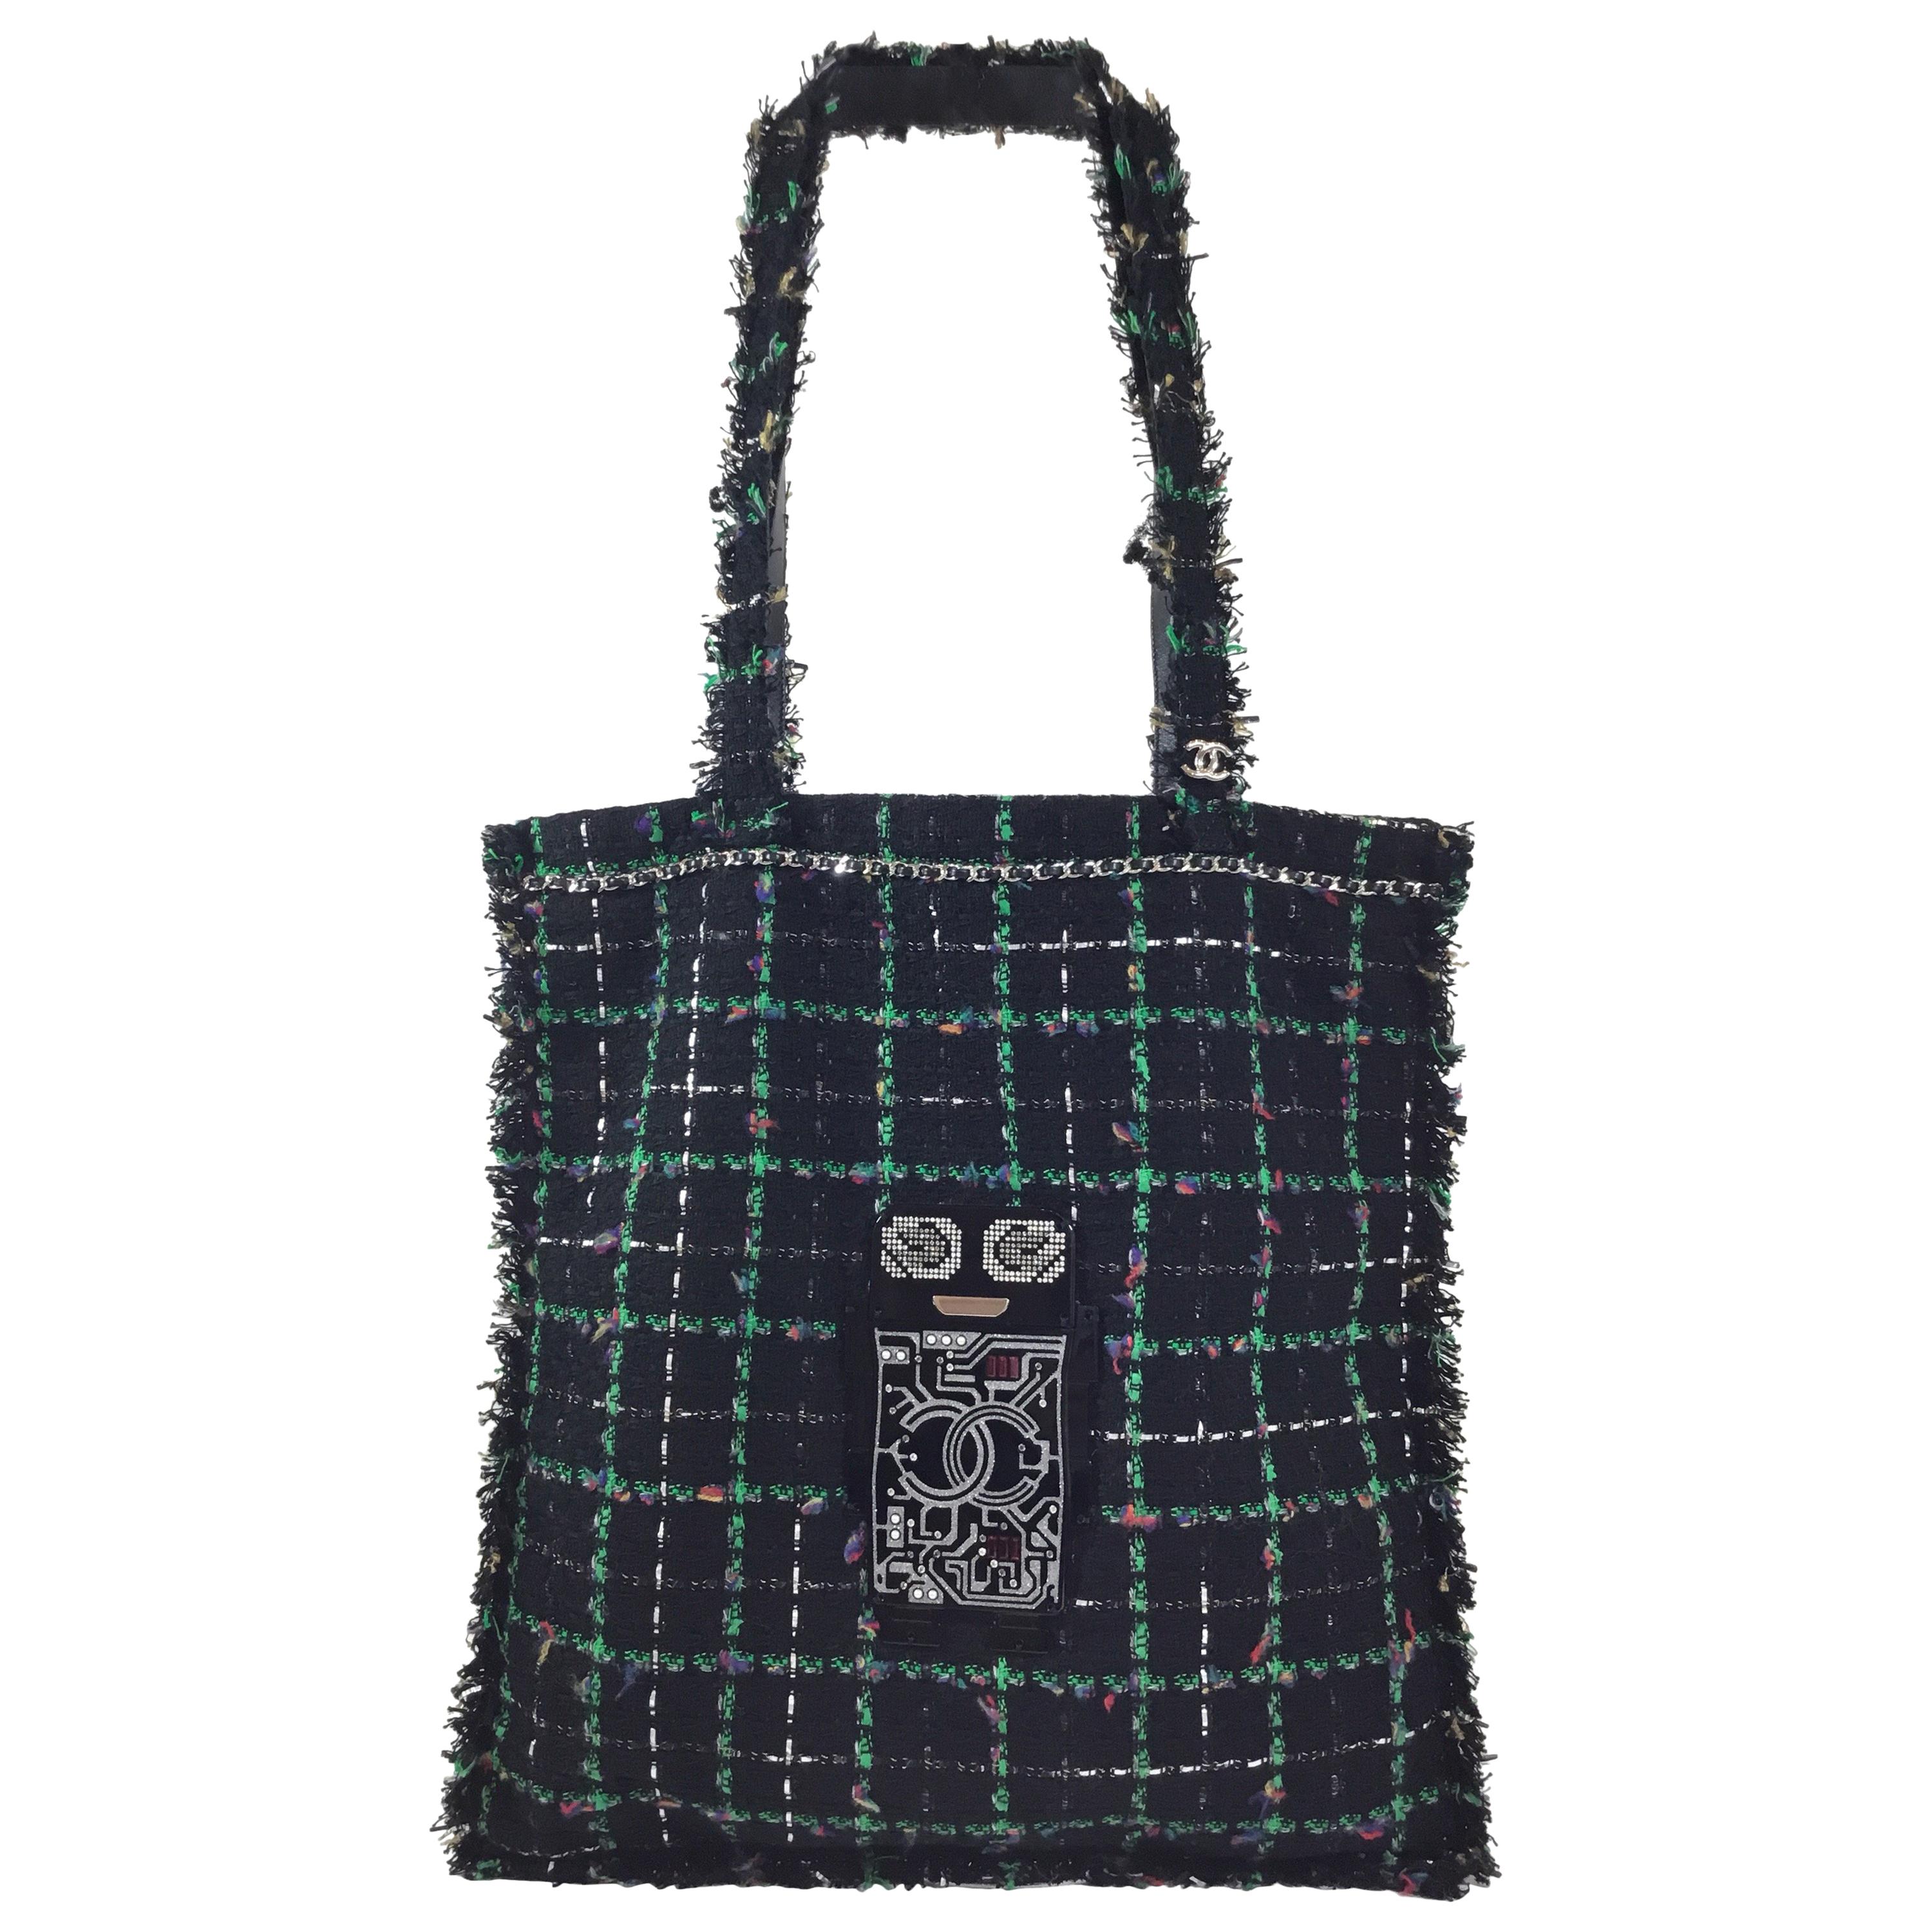 Chanel 2017 N°5 Tweed Tote Bag · INTO